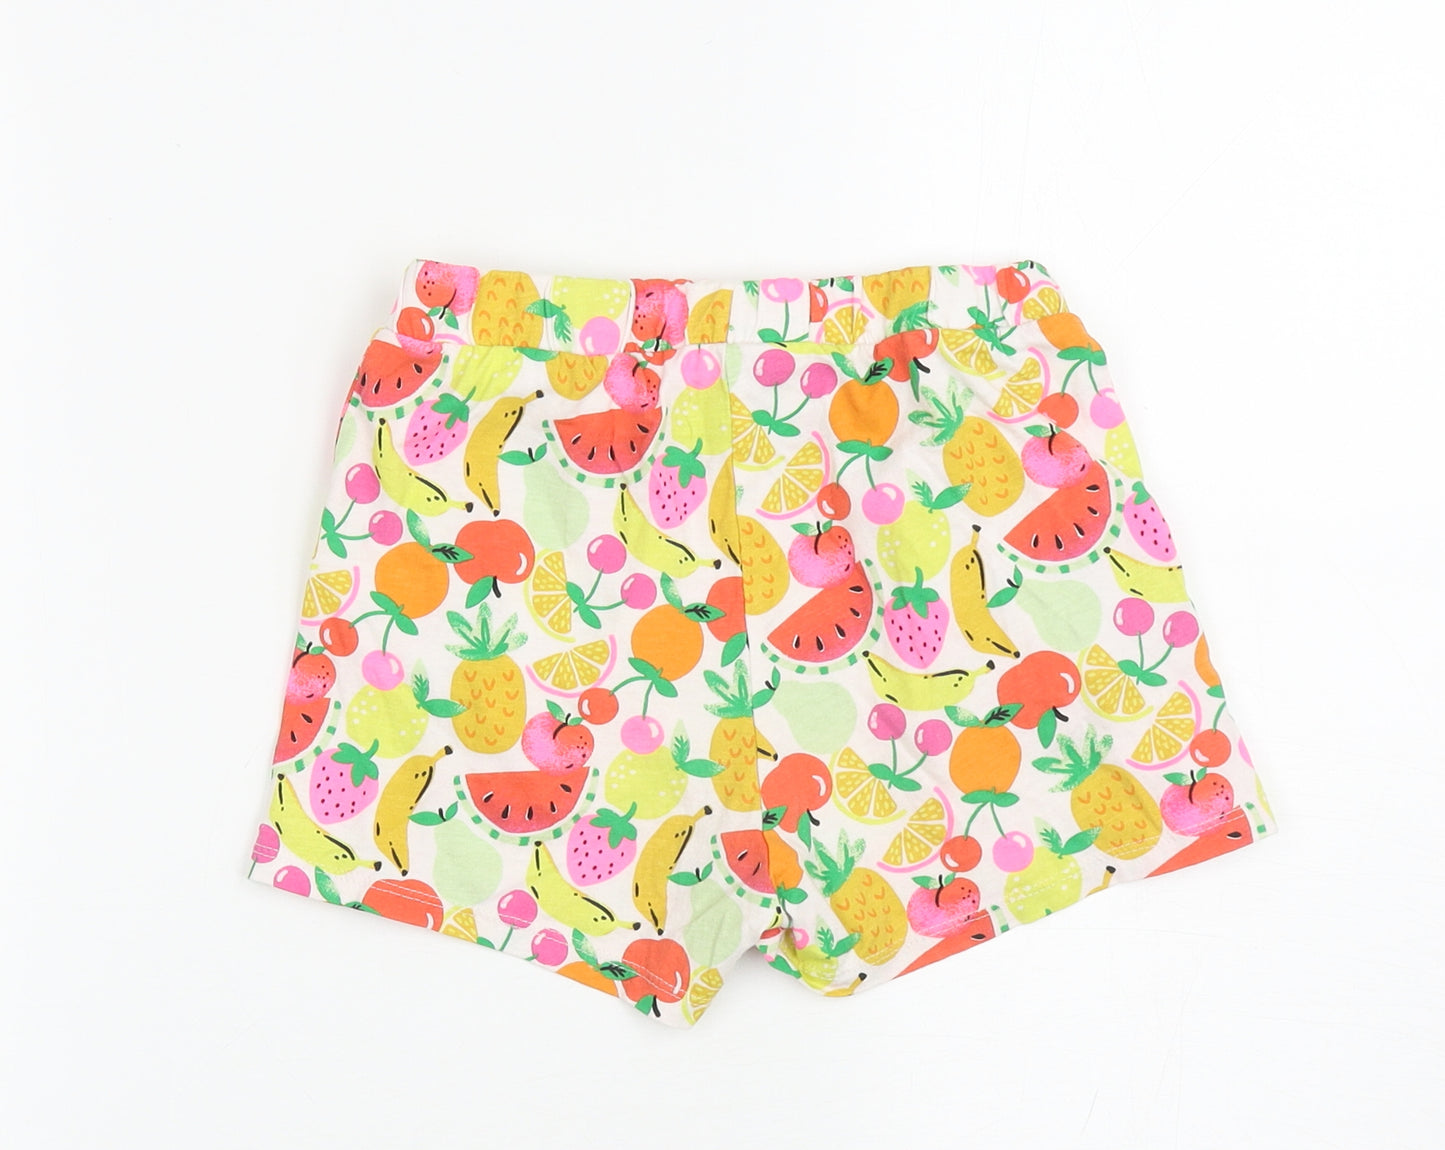 H&M Girls Multicoloured Geometric Cotton Sweat Shorts Size 8-9 Years L3 in Regular - Fruit